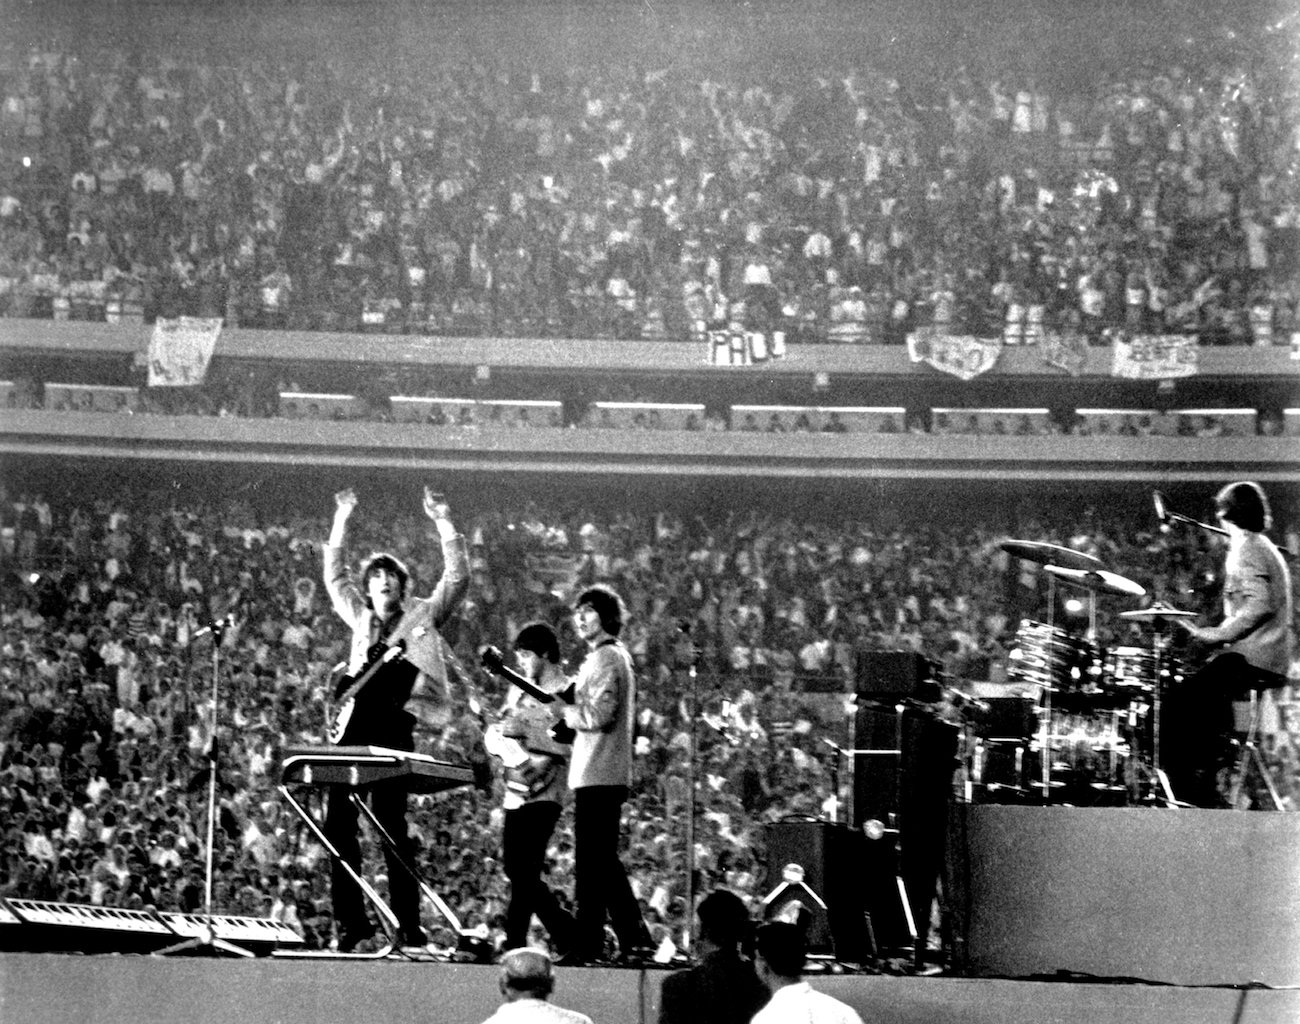 The Beatles' performance at Shea Stadium.